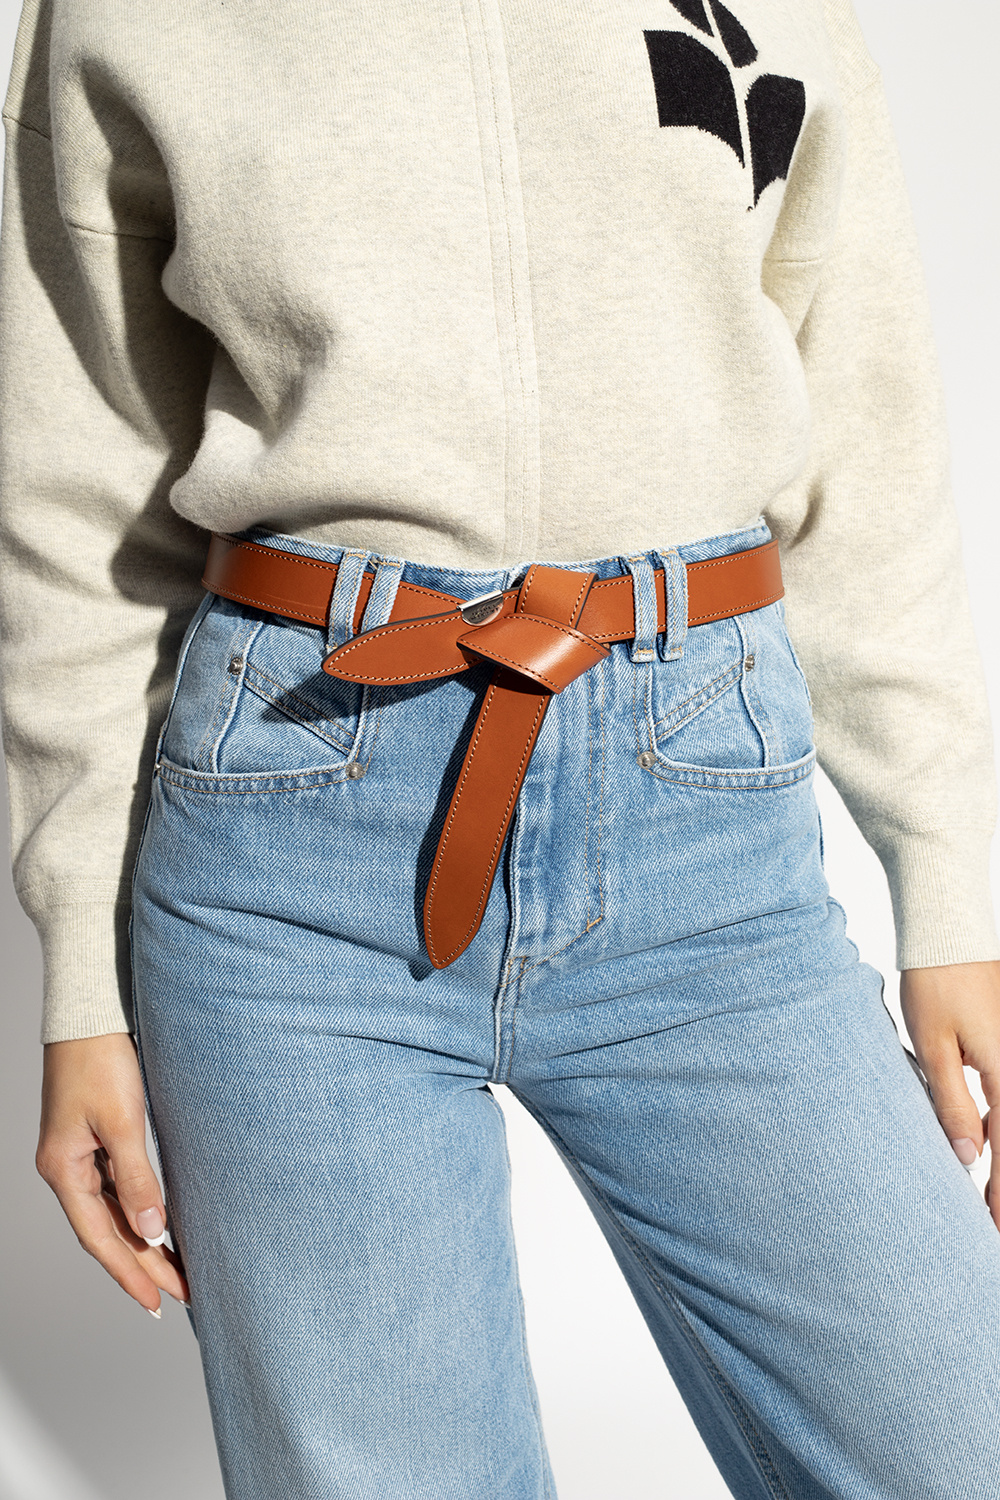 Isabel Marant ‘Lecce’ leather belt